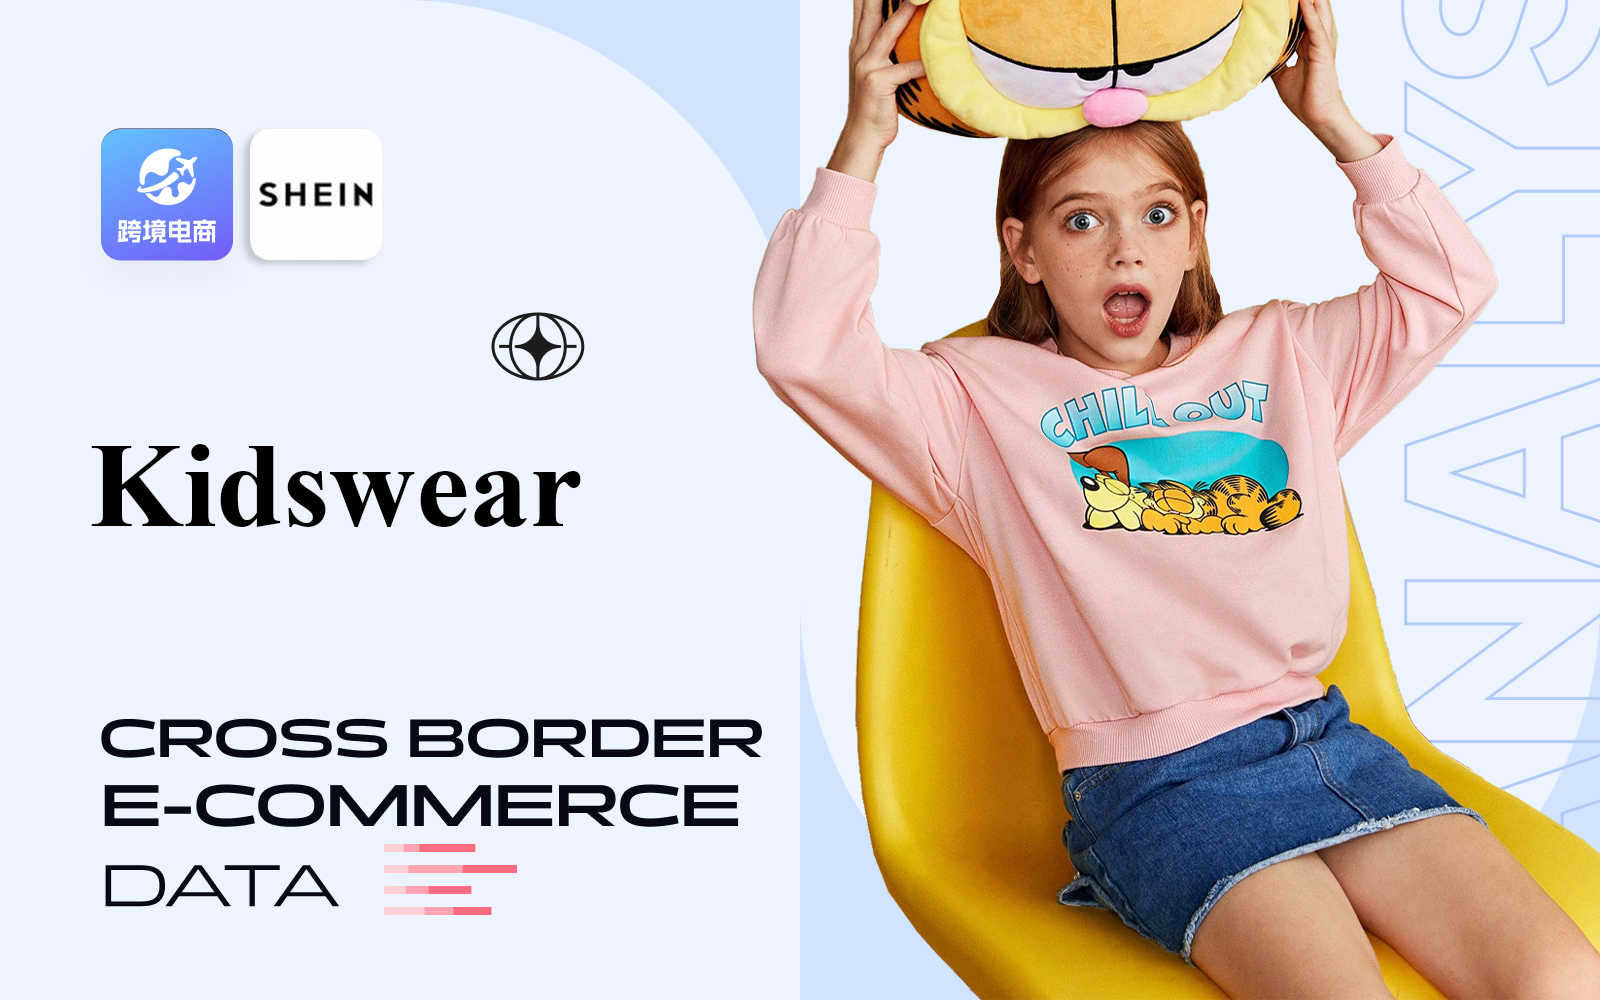 SHEIN -- The Data Analysis of Cross border E-commerce Kidswear Brand in January